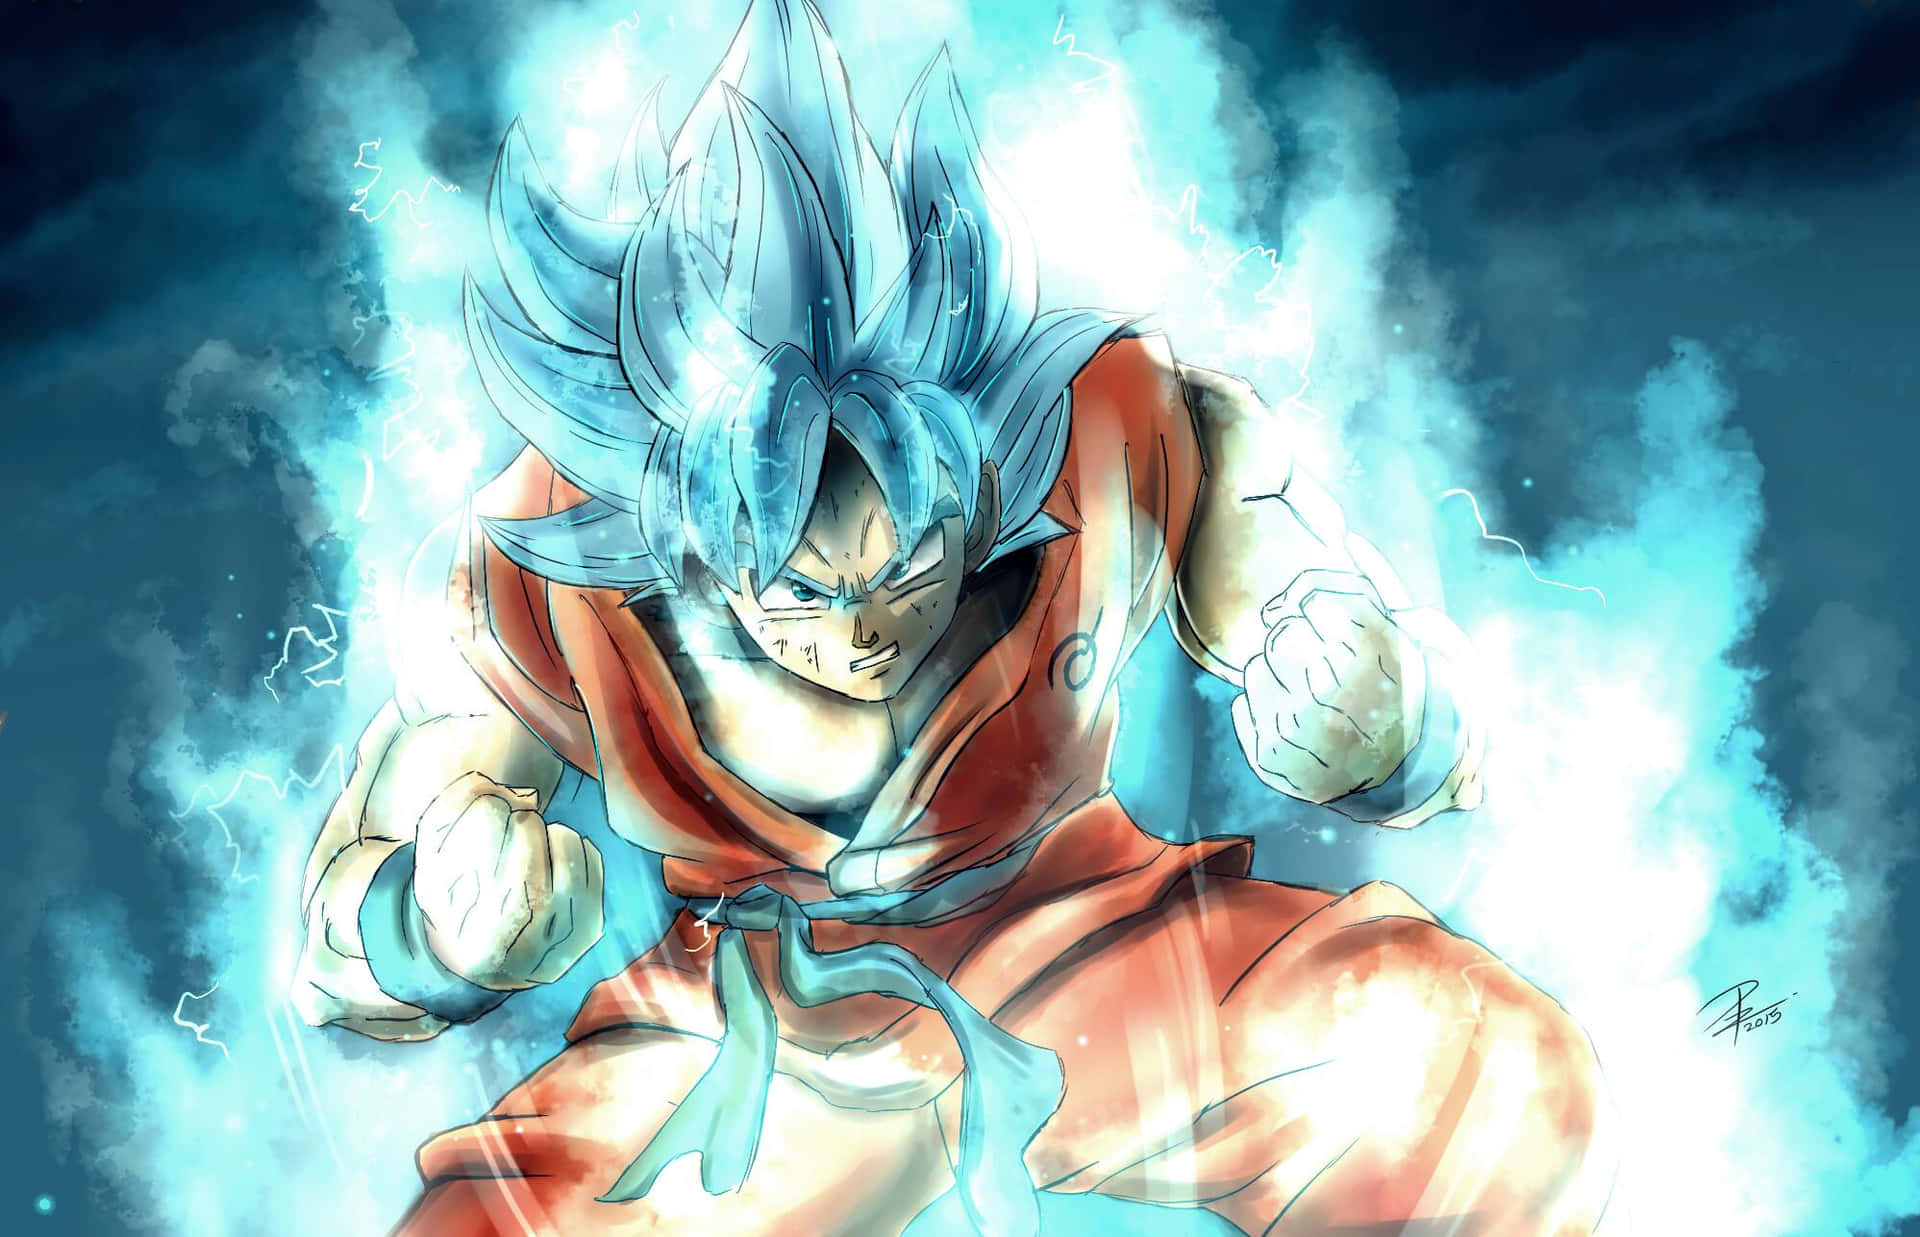 Imagemdo Goku Super Saiyan Blue.